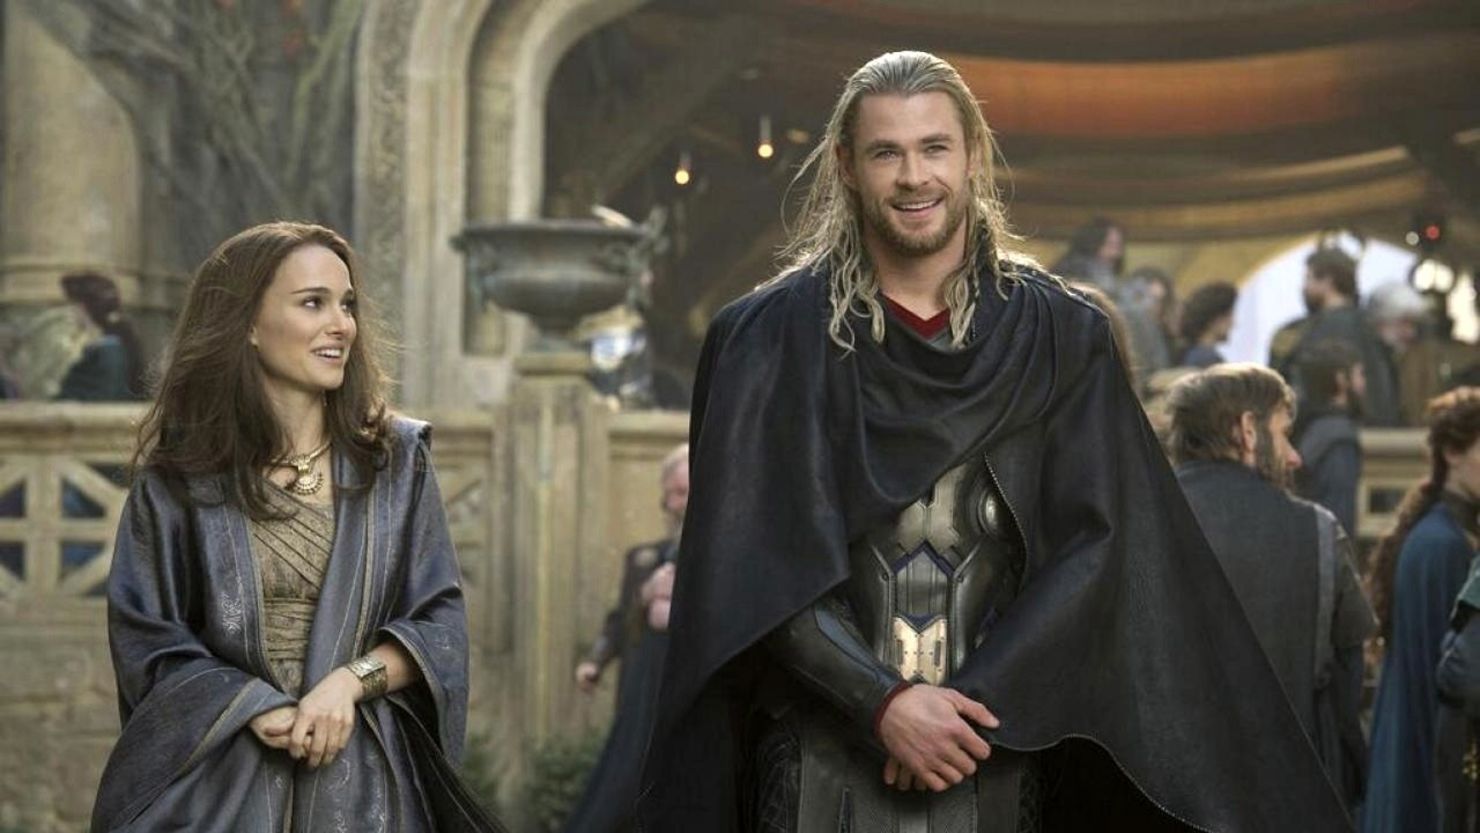 Internationally, "Thor: The Dark World " starring Natalie Portman and Chris Hemsworth has grossed $332.8 million.